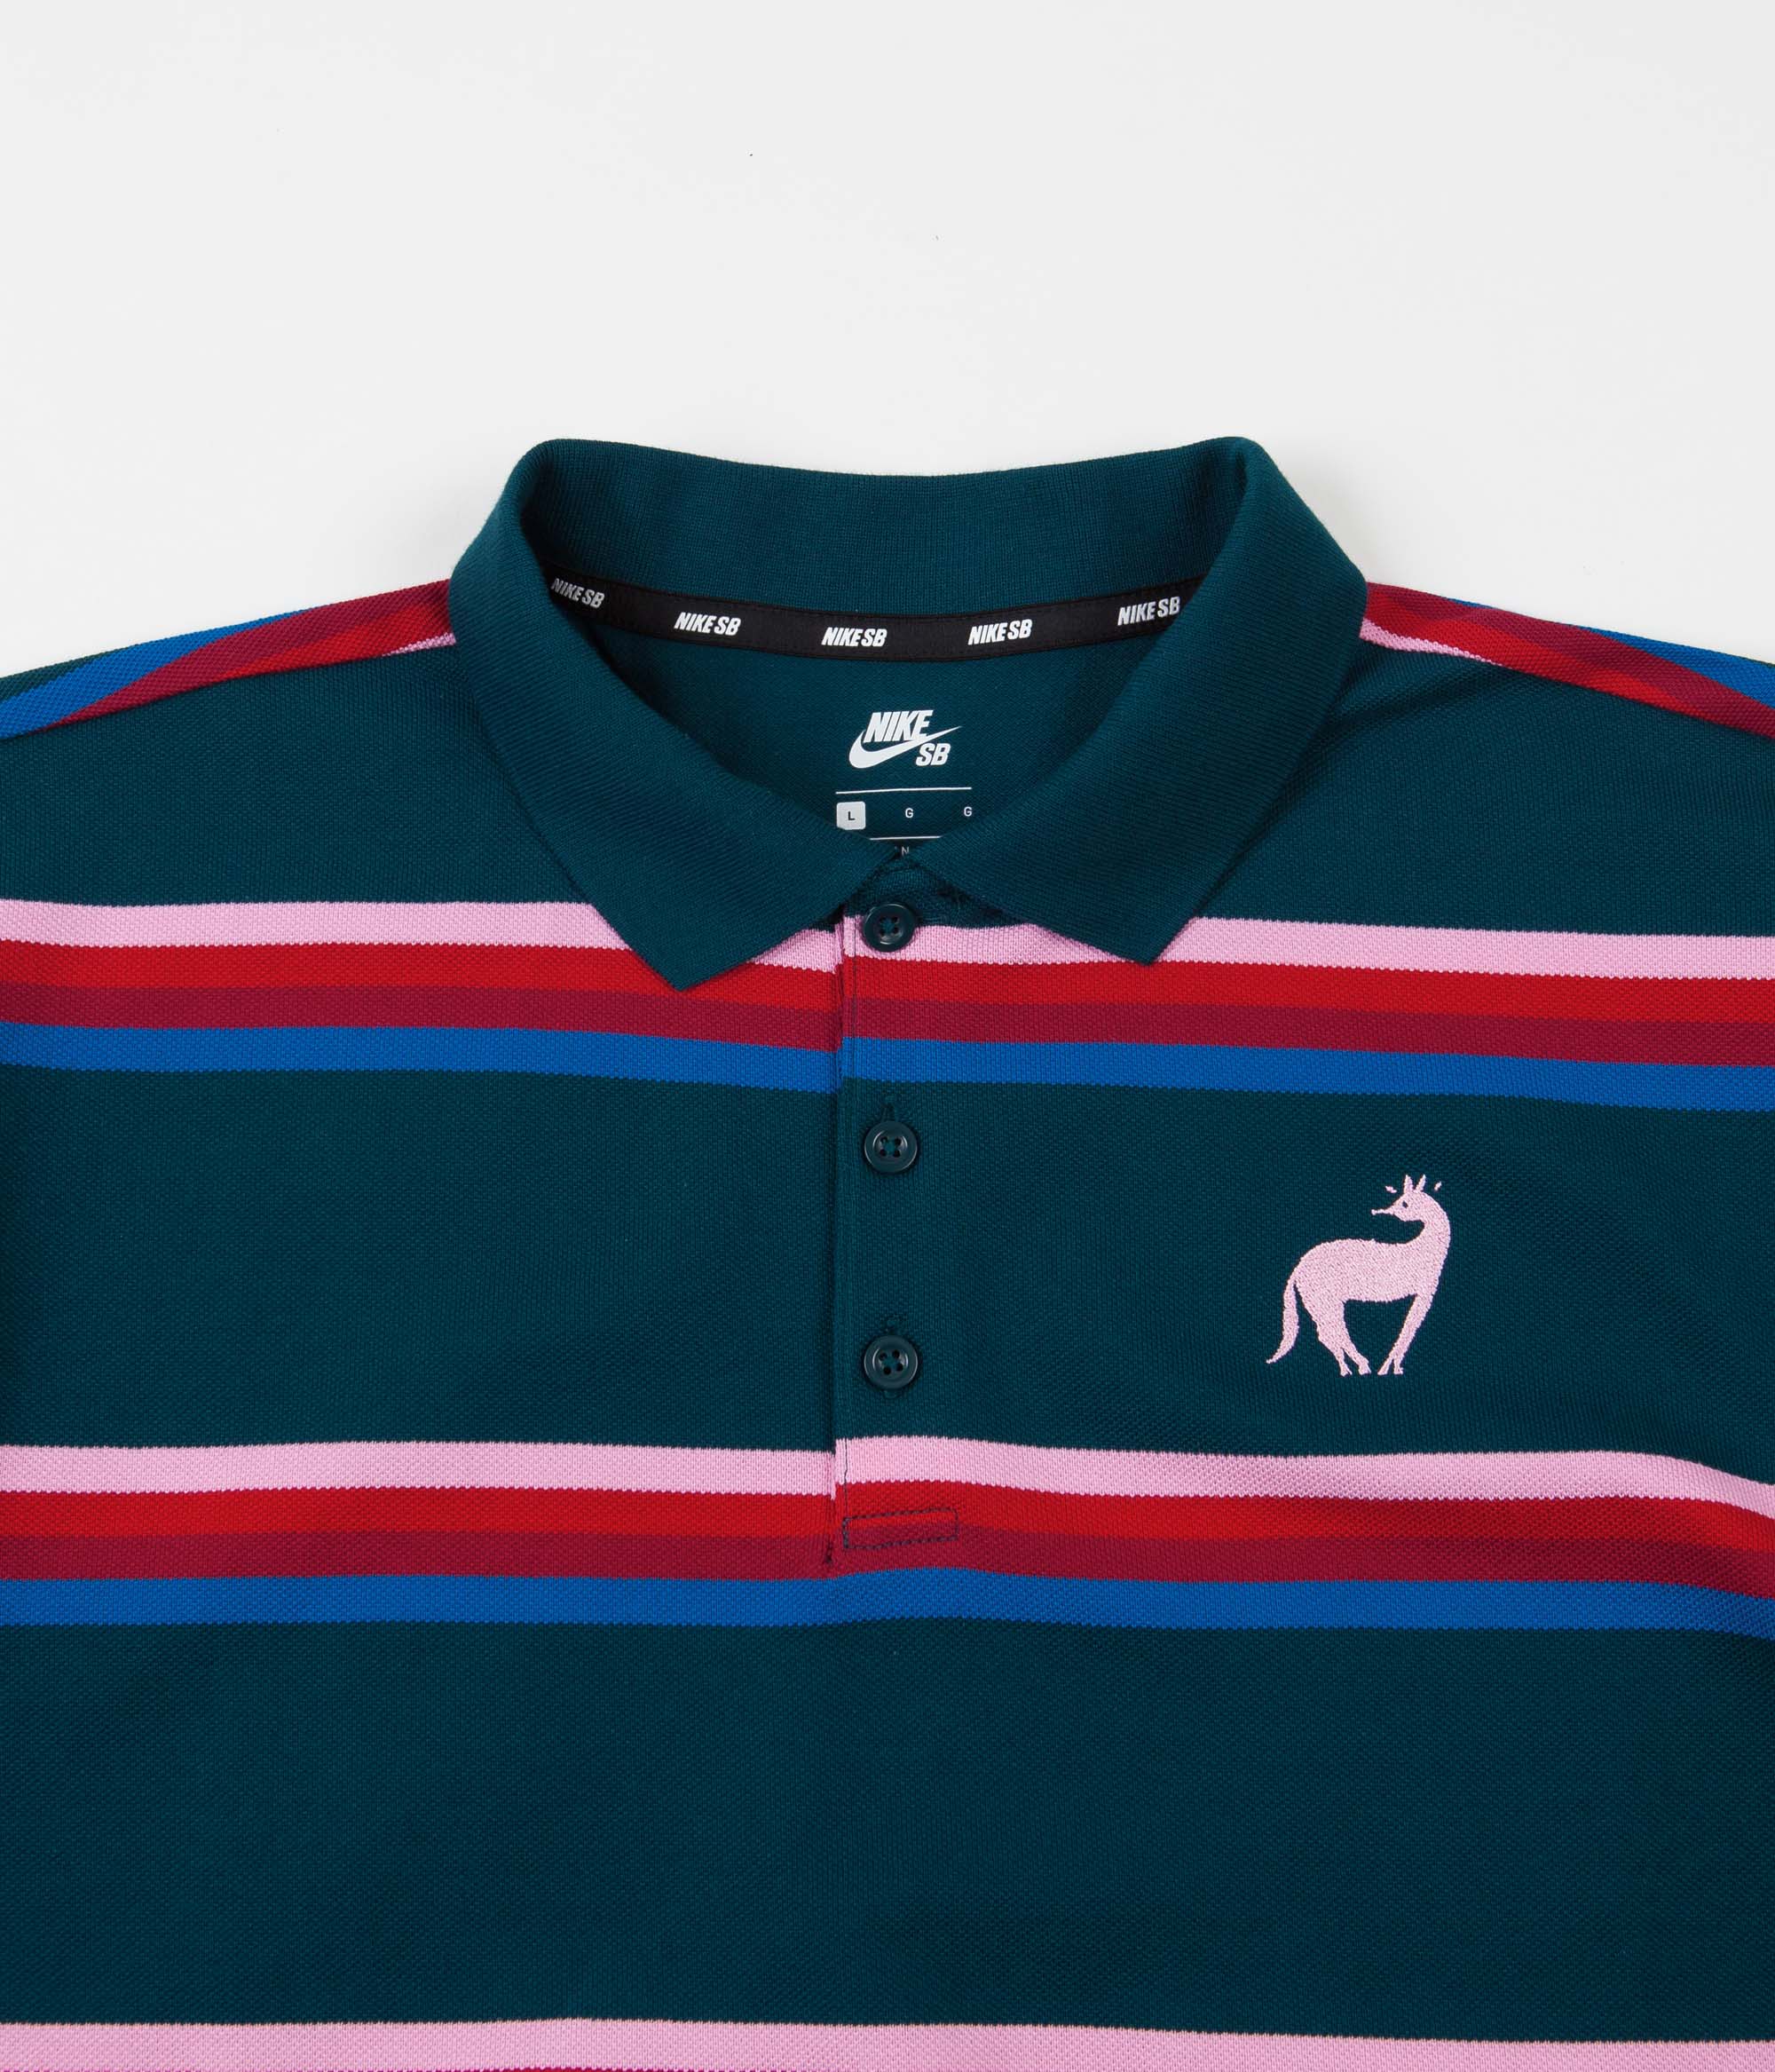 Nike SB x Parra Polo Shirt - Midnight Turquoise / Military Blue / Pink |  Flatspot